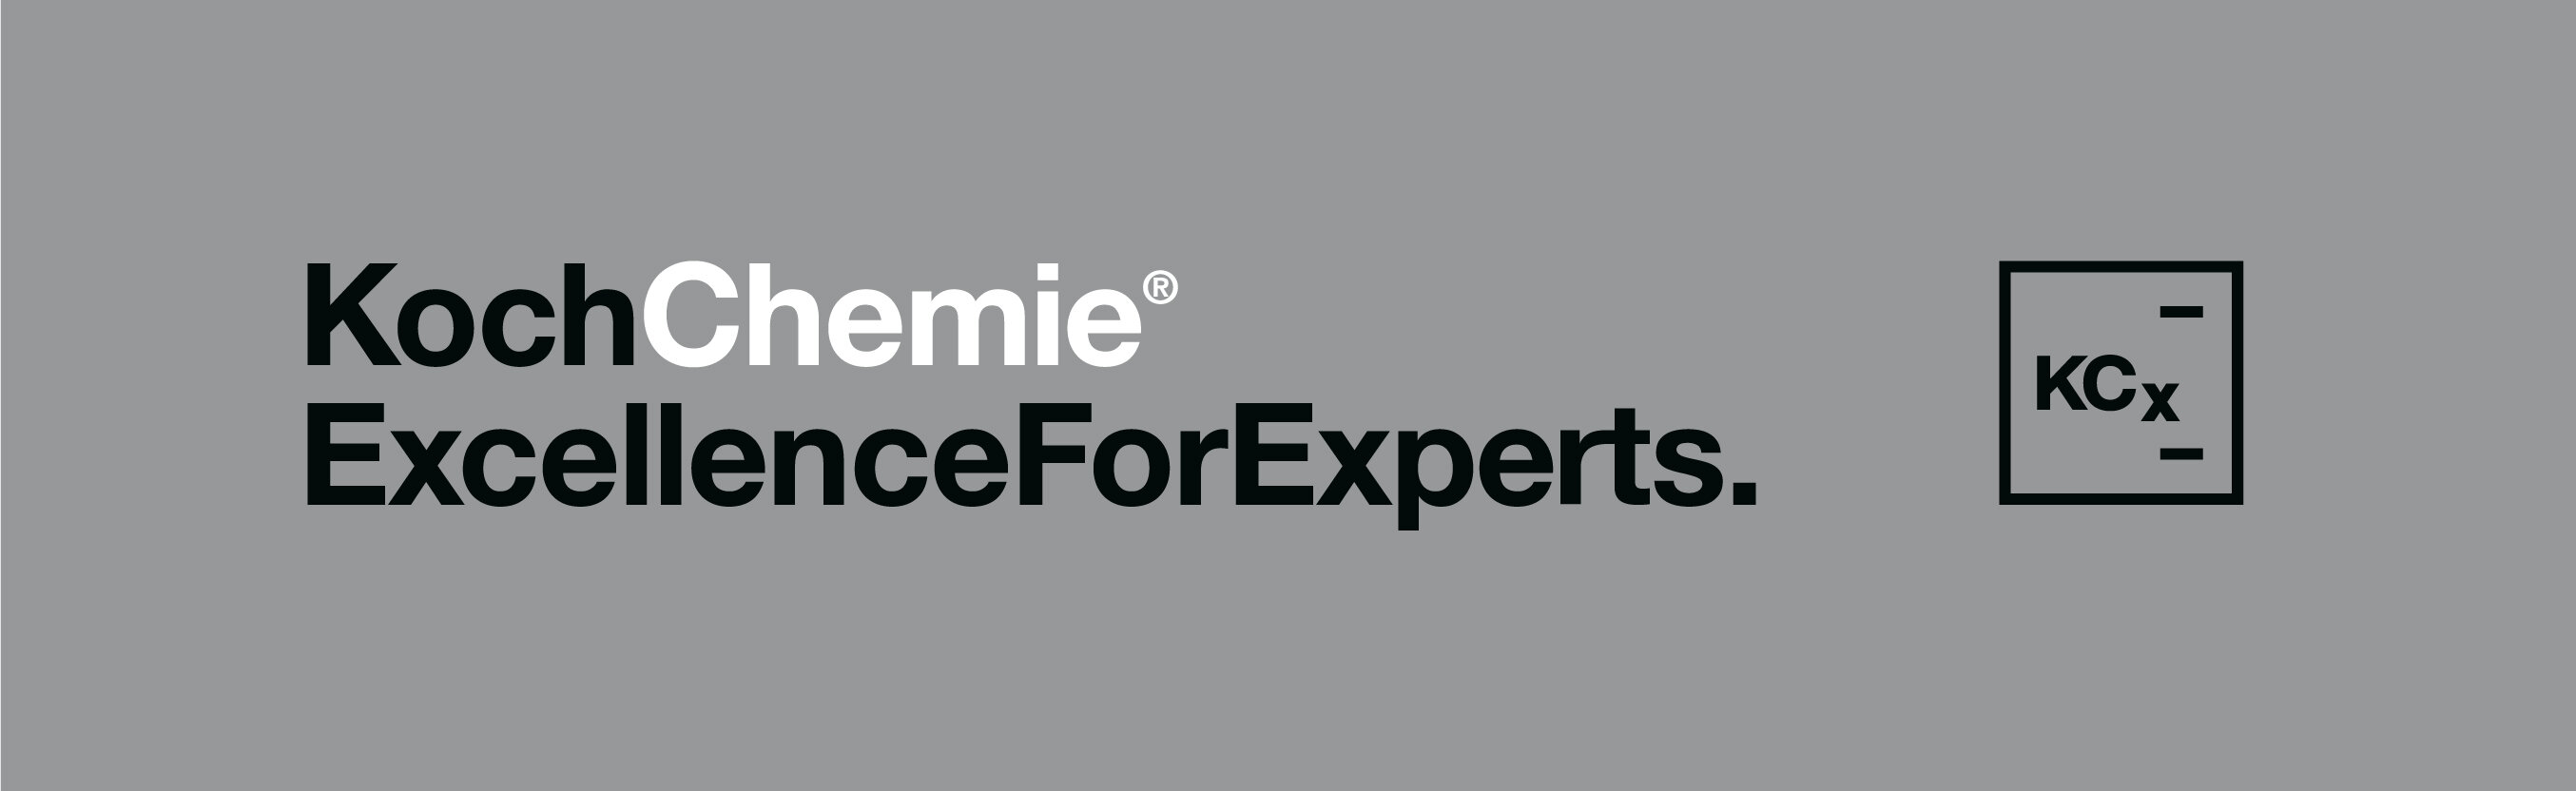 Koch-Chemie-ExcellenceForExperts